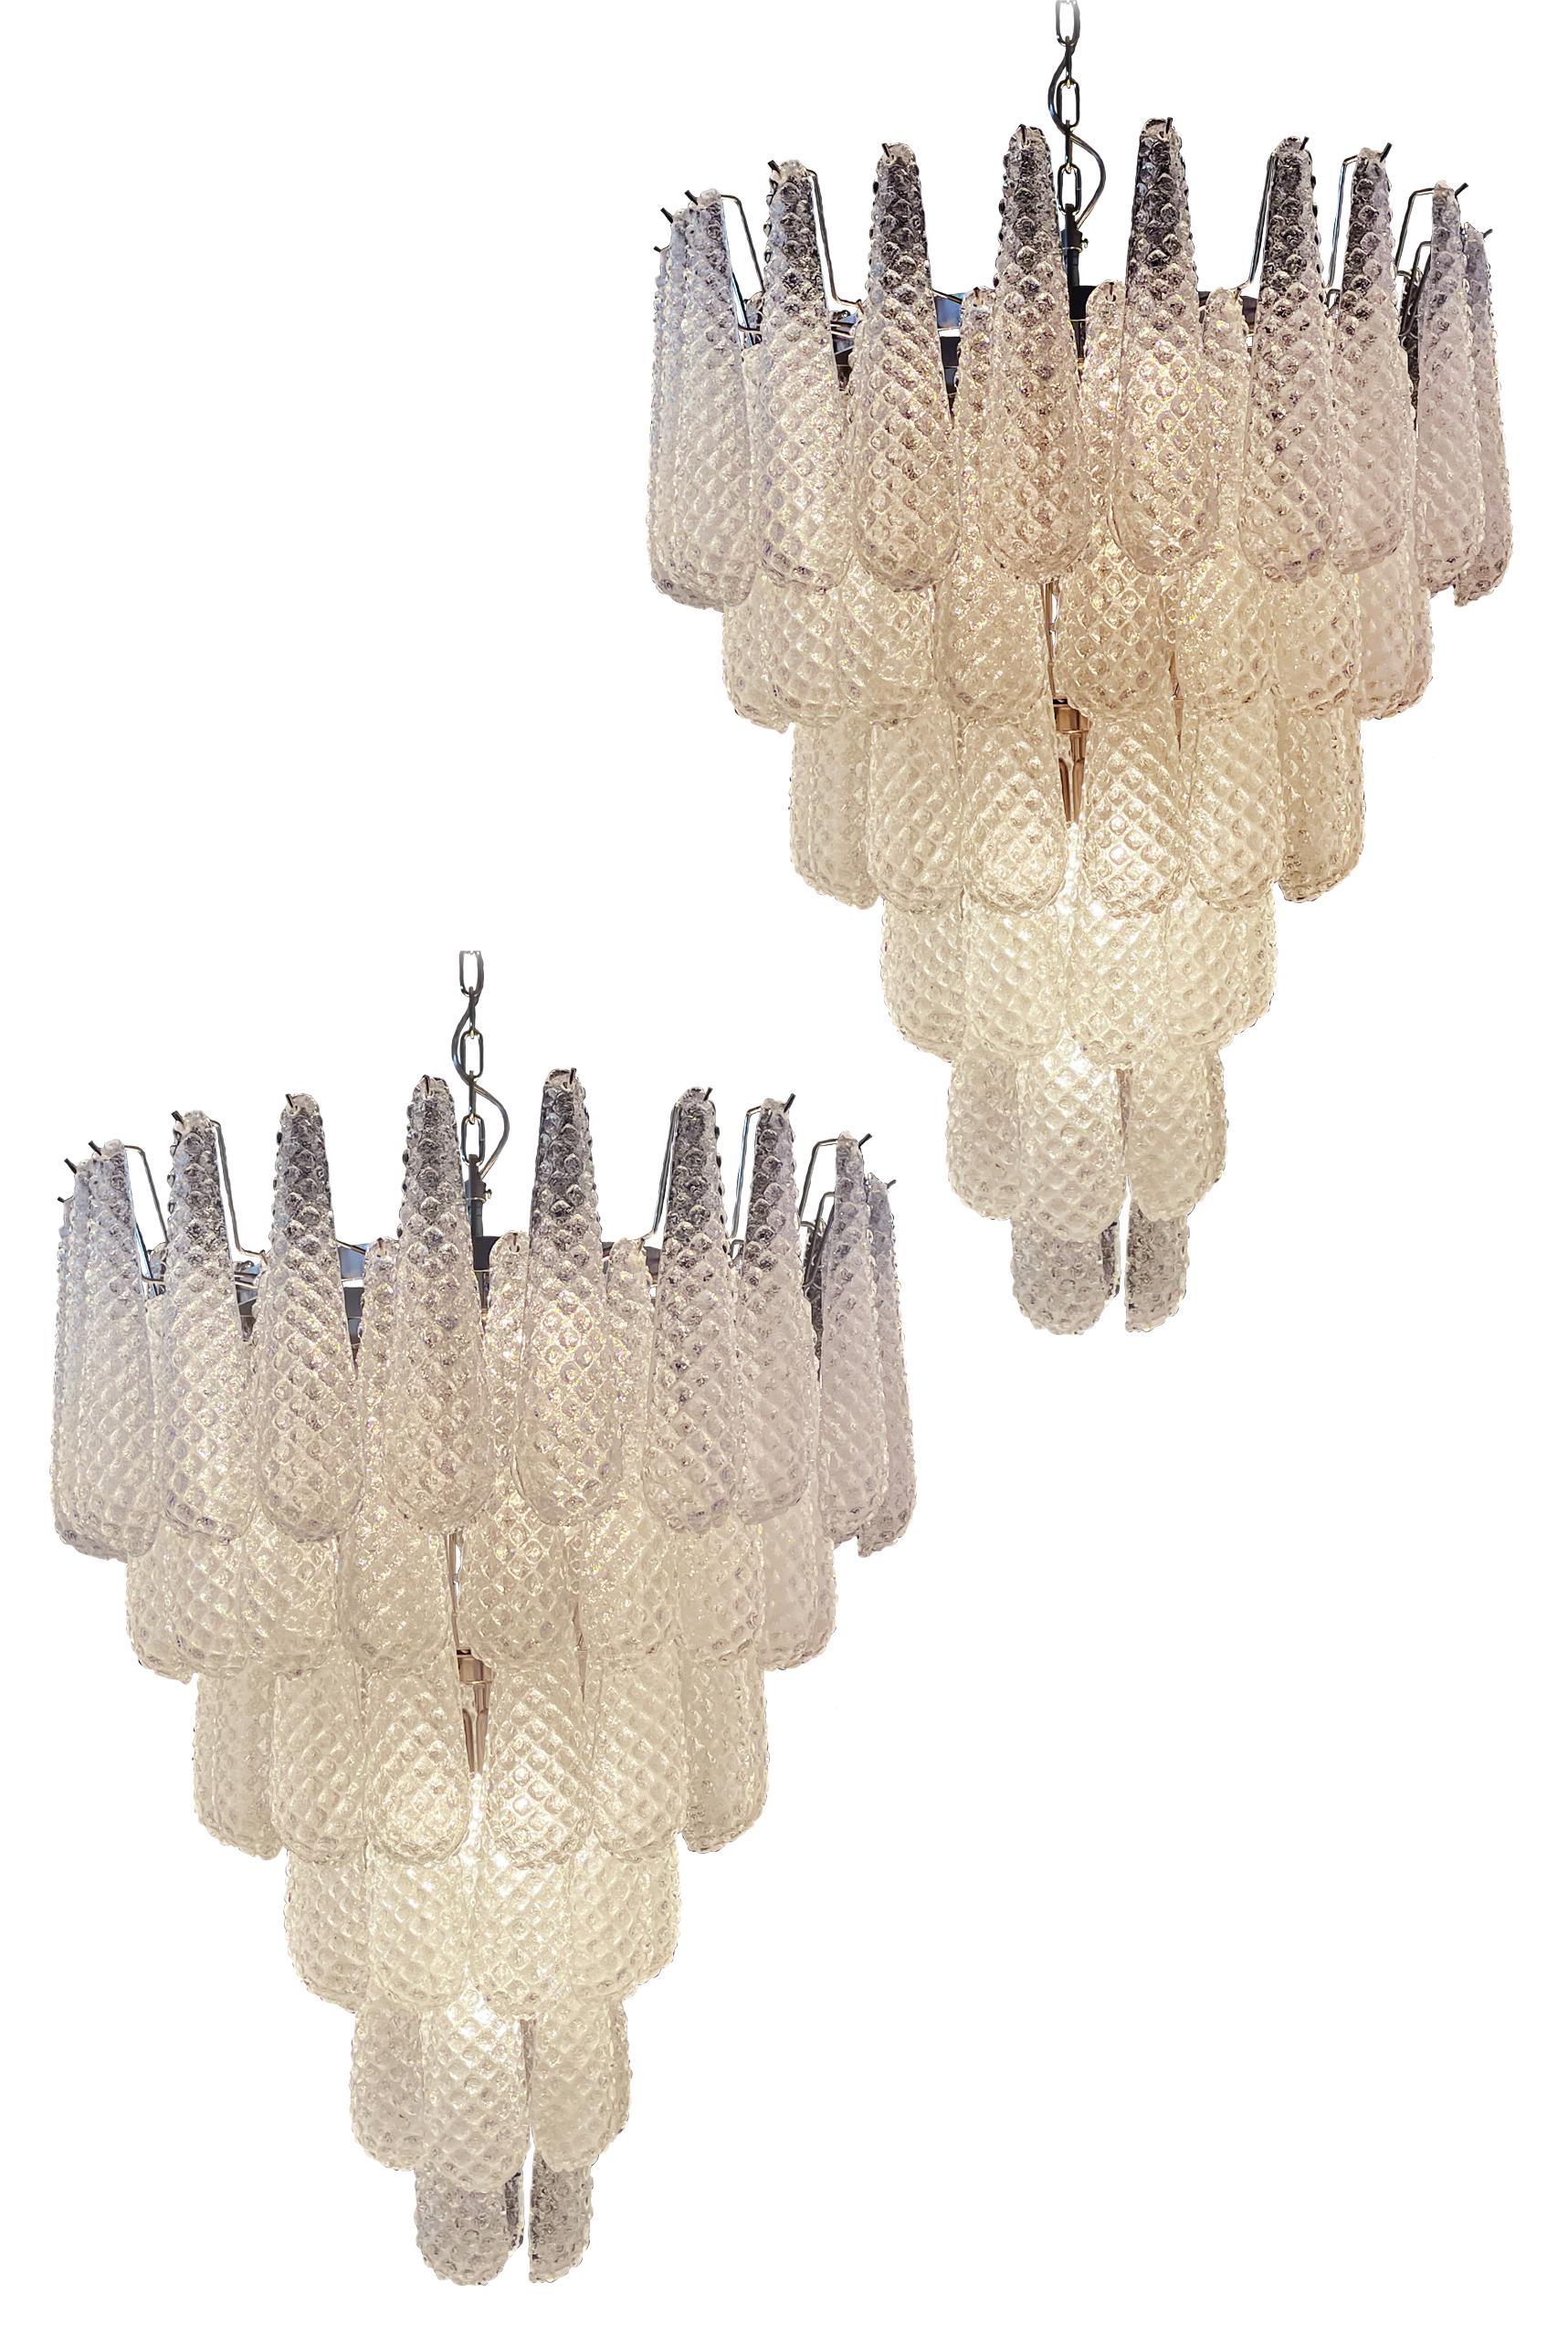 Magnificent Italian vintage Murano glass chandeliers - 75 glass petals drop For Sale 12